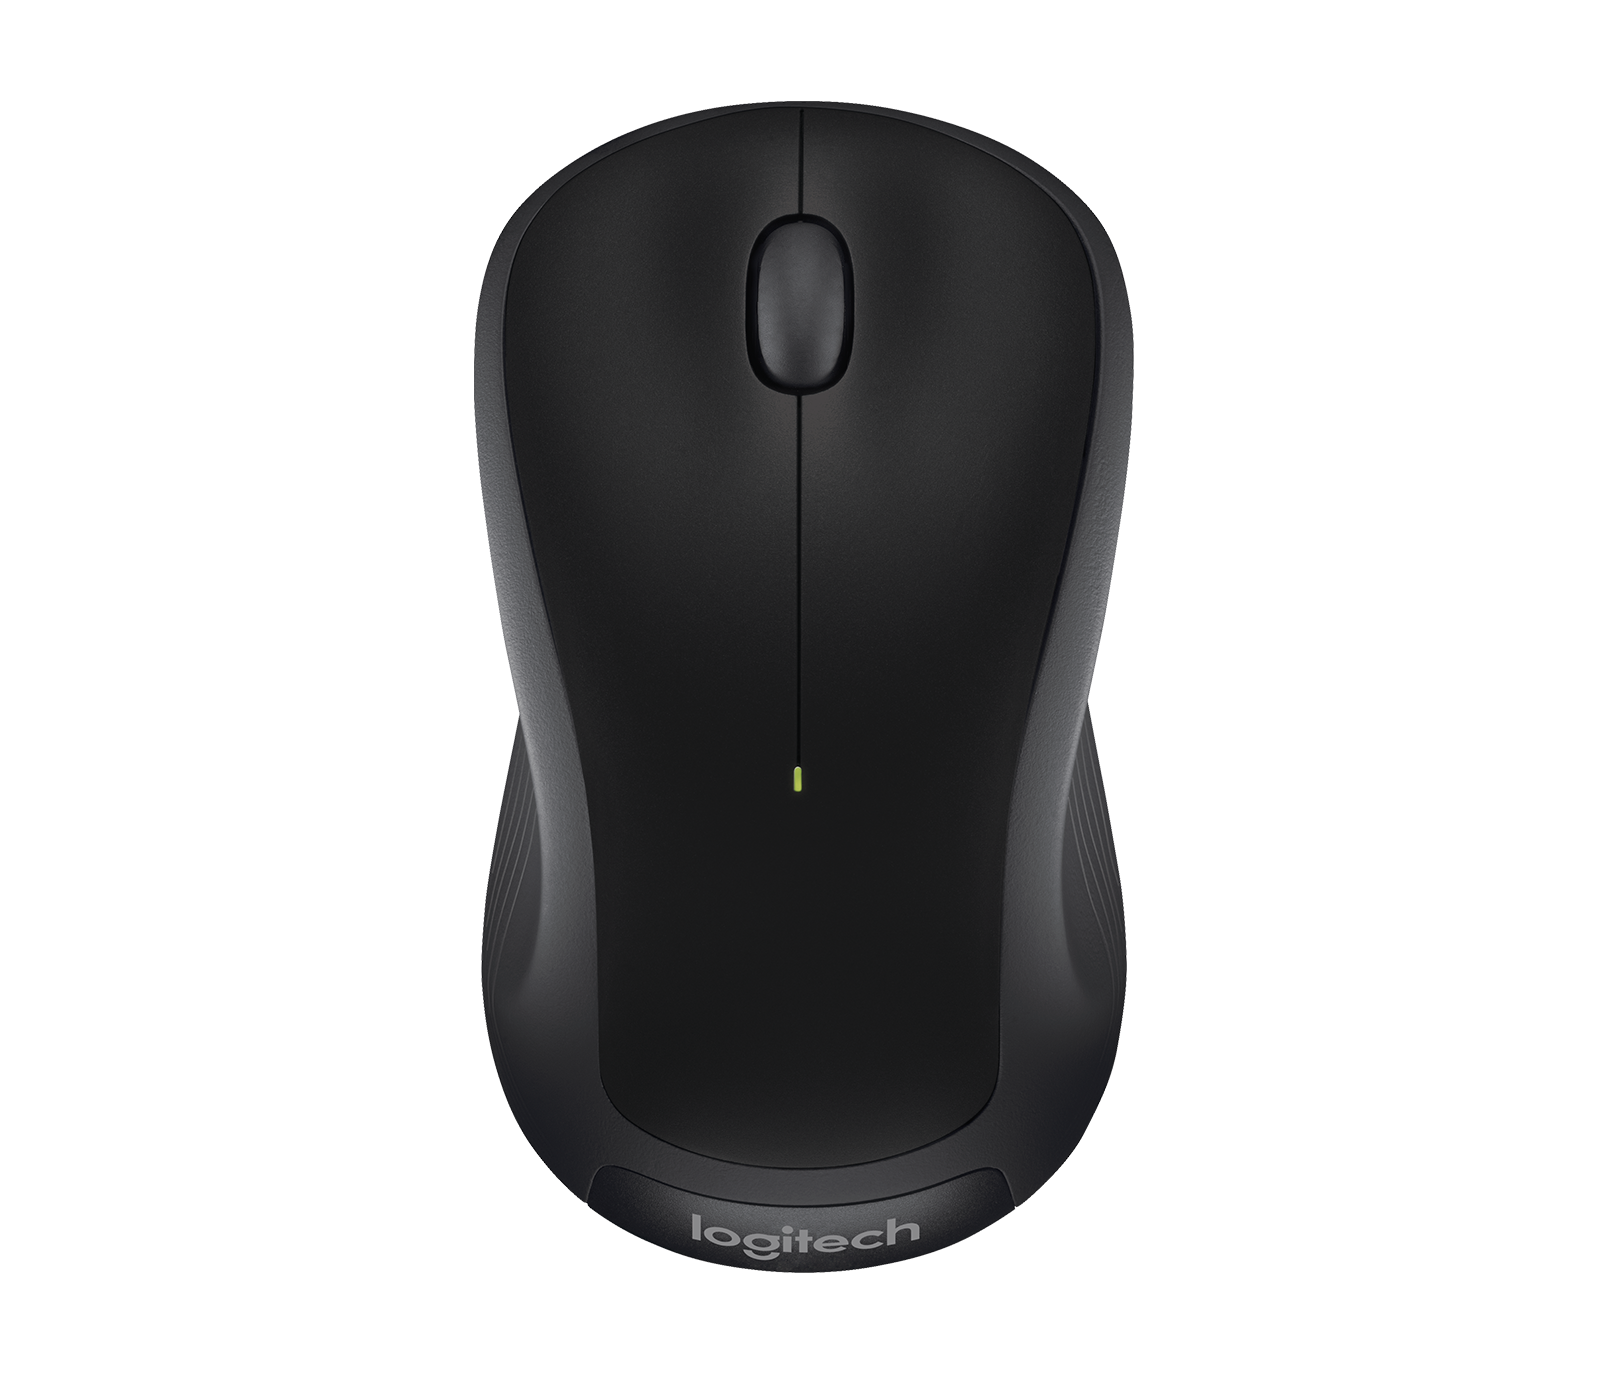 rigtig meget Elendighed præmedicinering Logitech M310 Wireless Mouse with Ambidextrous Design